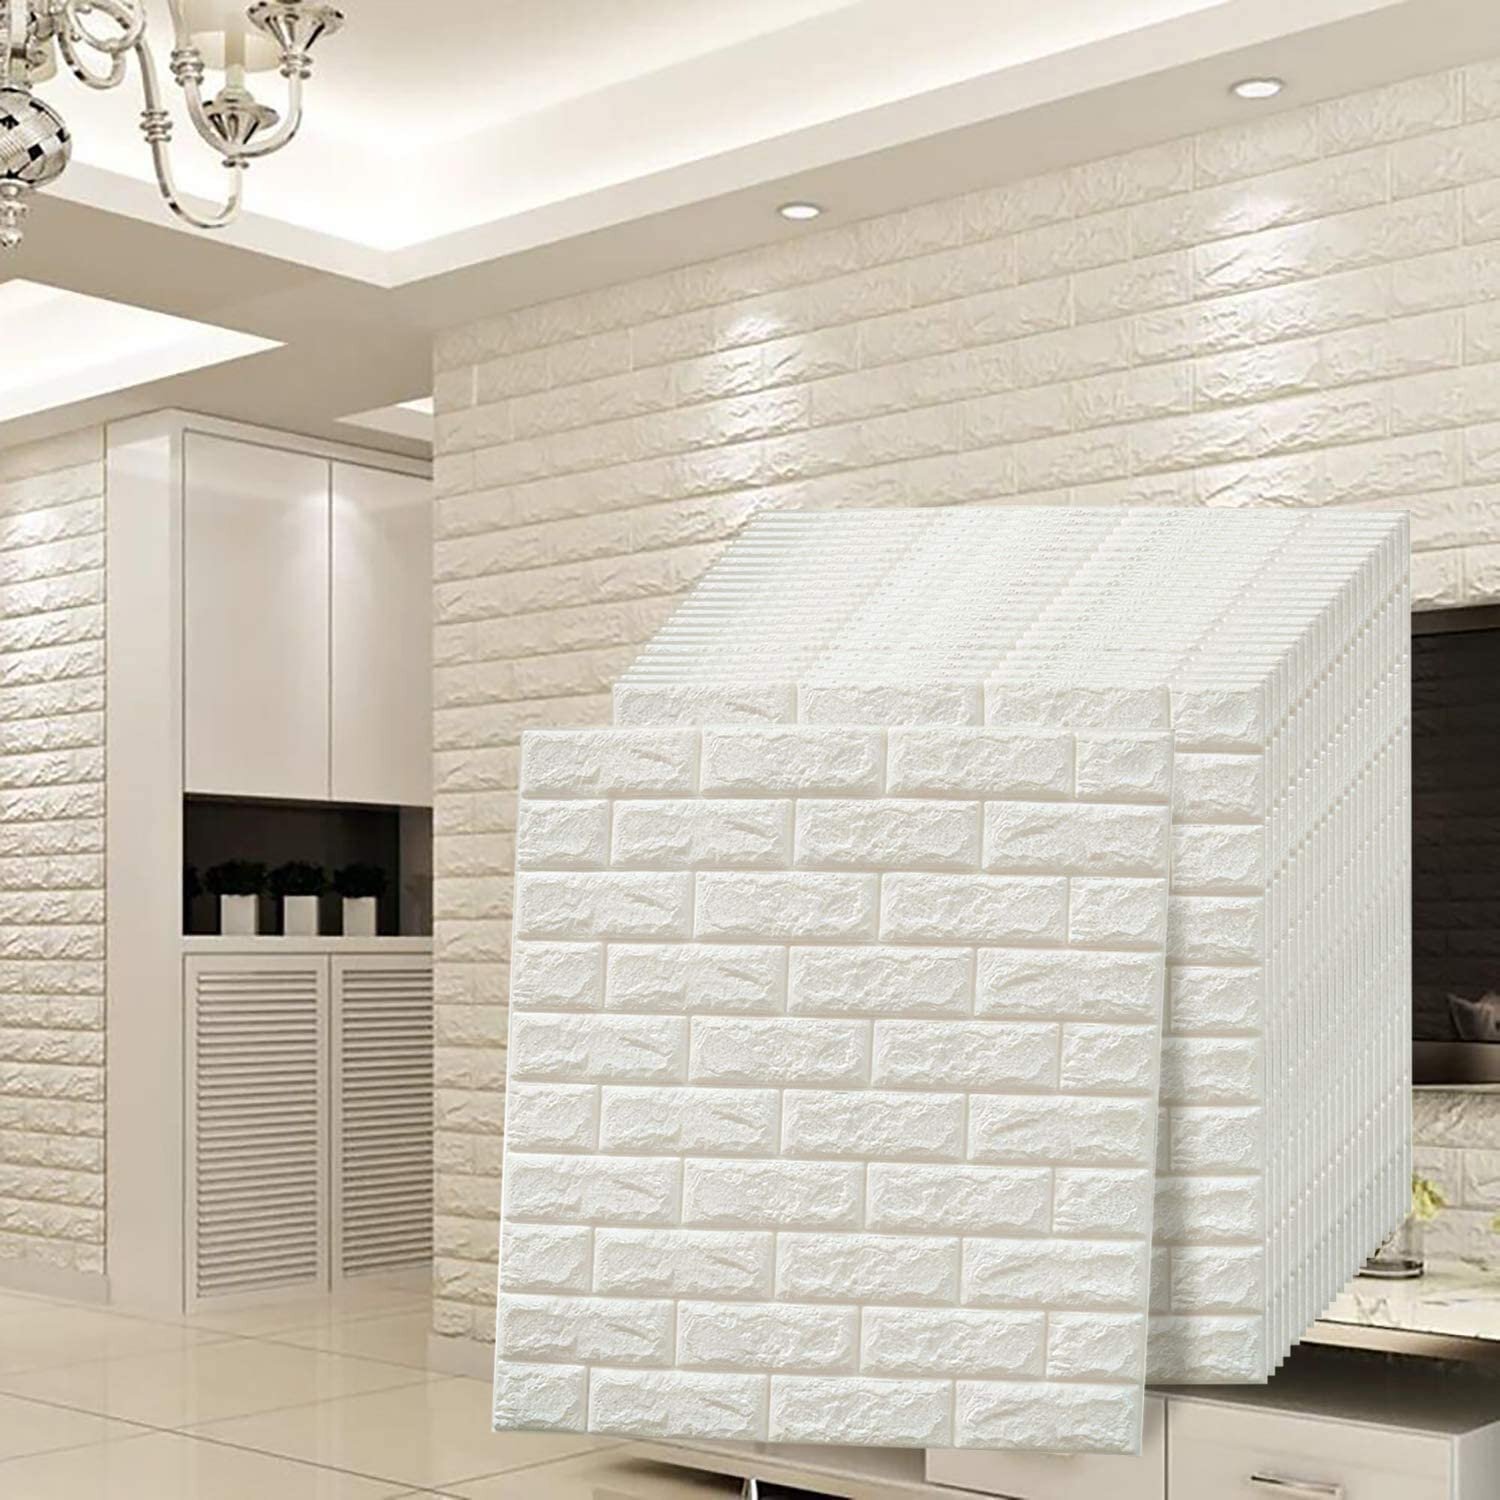 3D Brick Wall Sticker Self-adhesive Tile Sticker Home Living Room Bedroom Decor